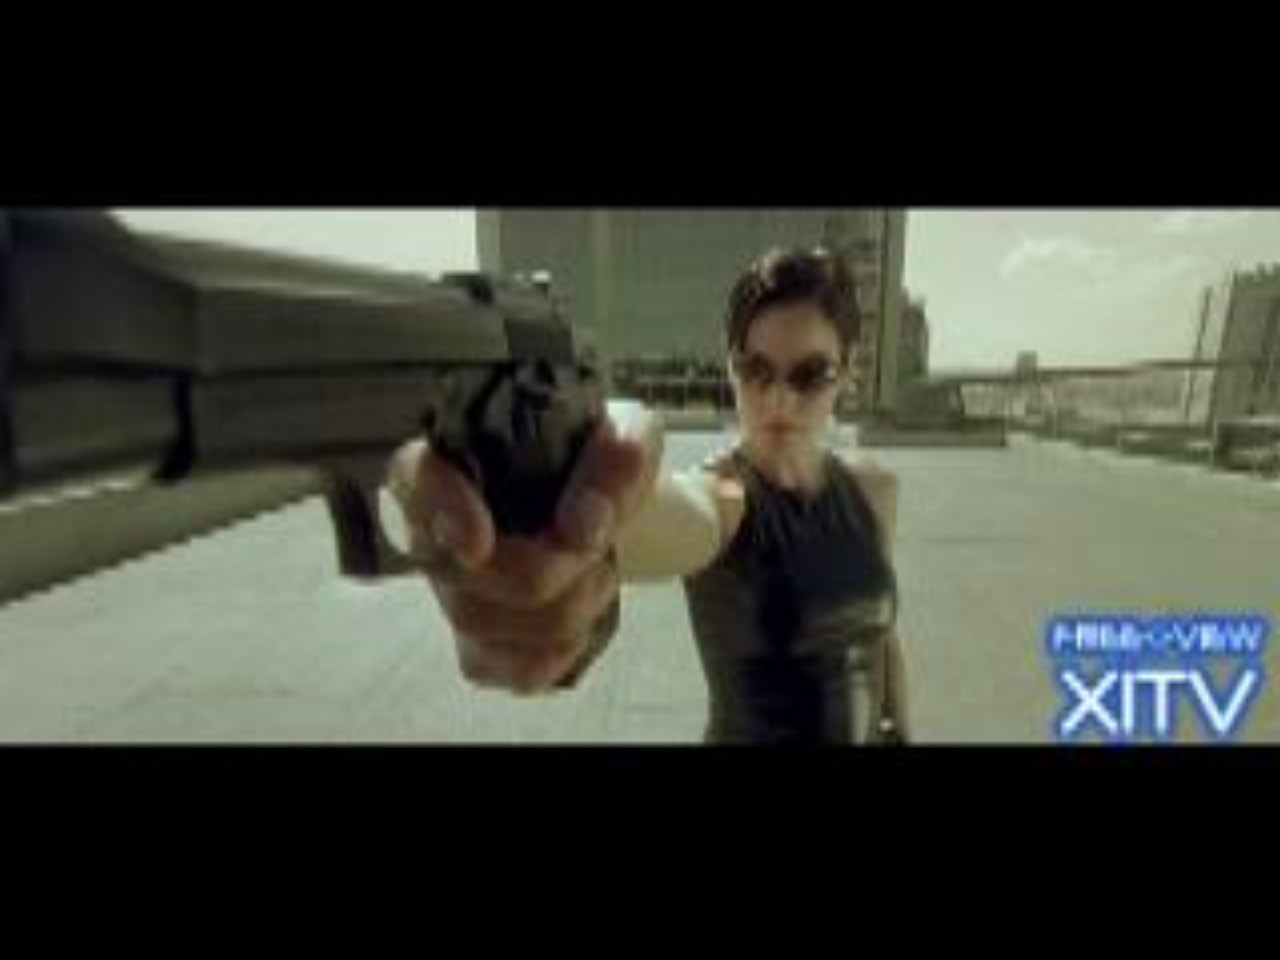 XITV FREE <> VIEW "The Matrix!"